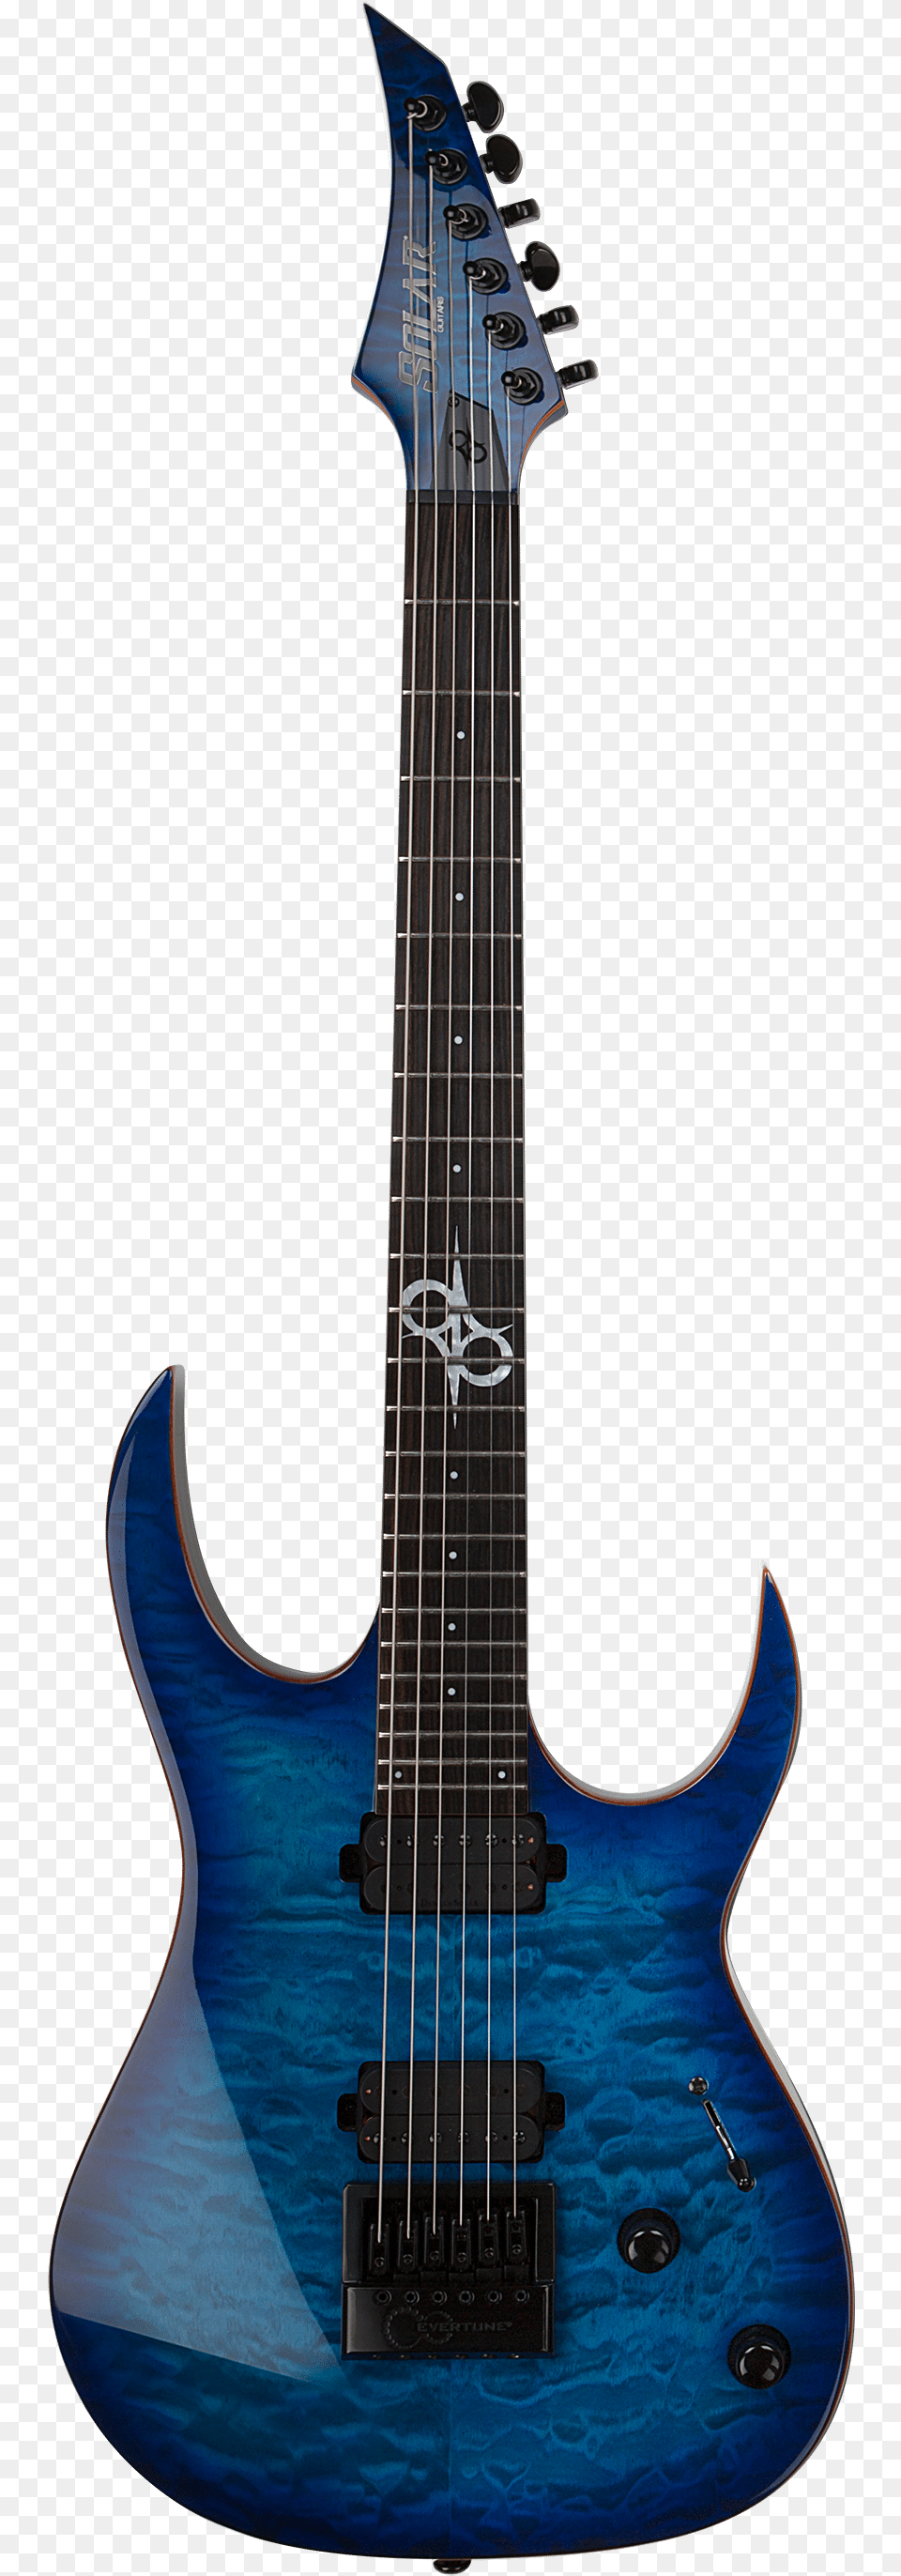 Type S Washburn Parallaxe Solar 6 String, Bass Guitar, Guitar, Musical Instrument, Electric Guitar Png Image